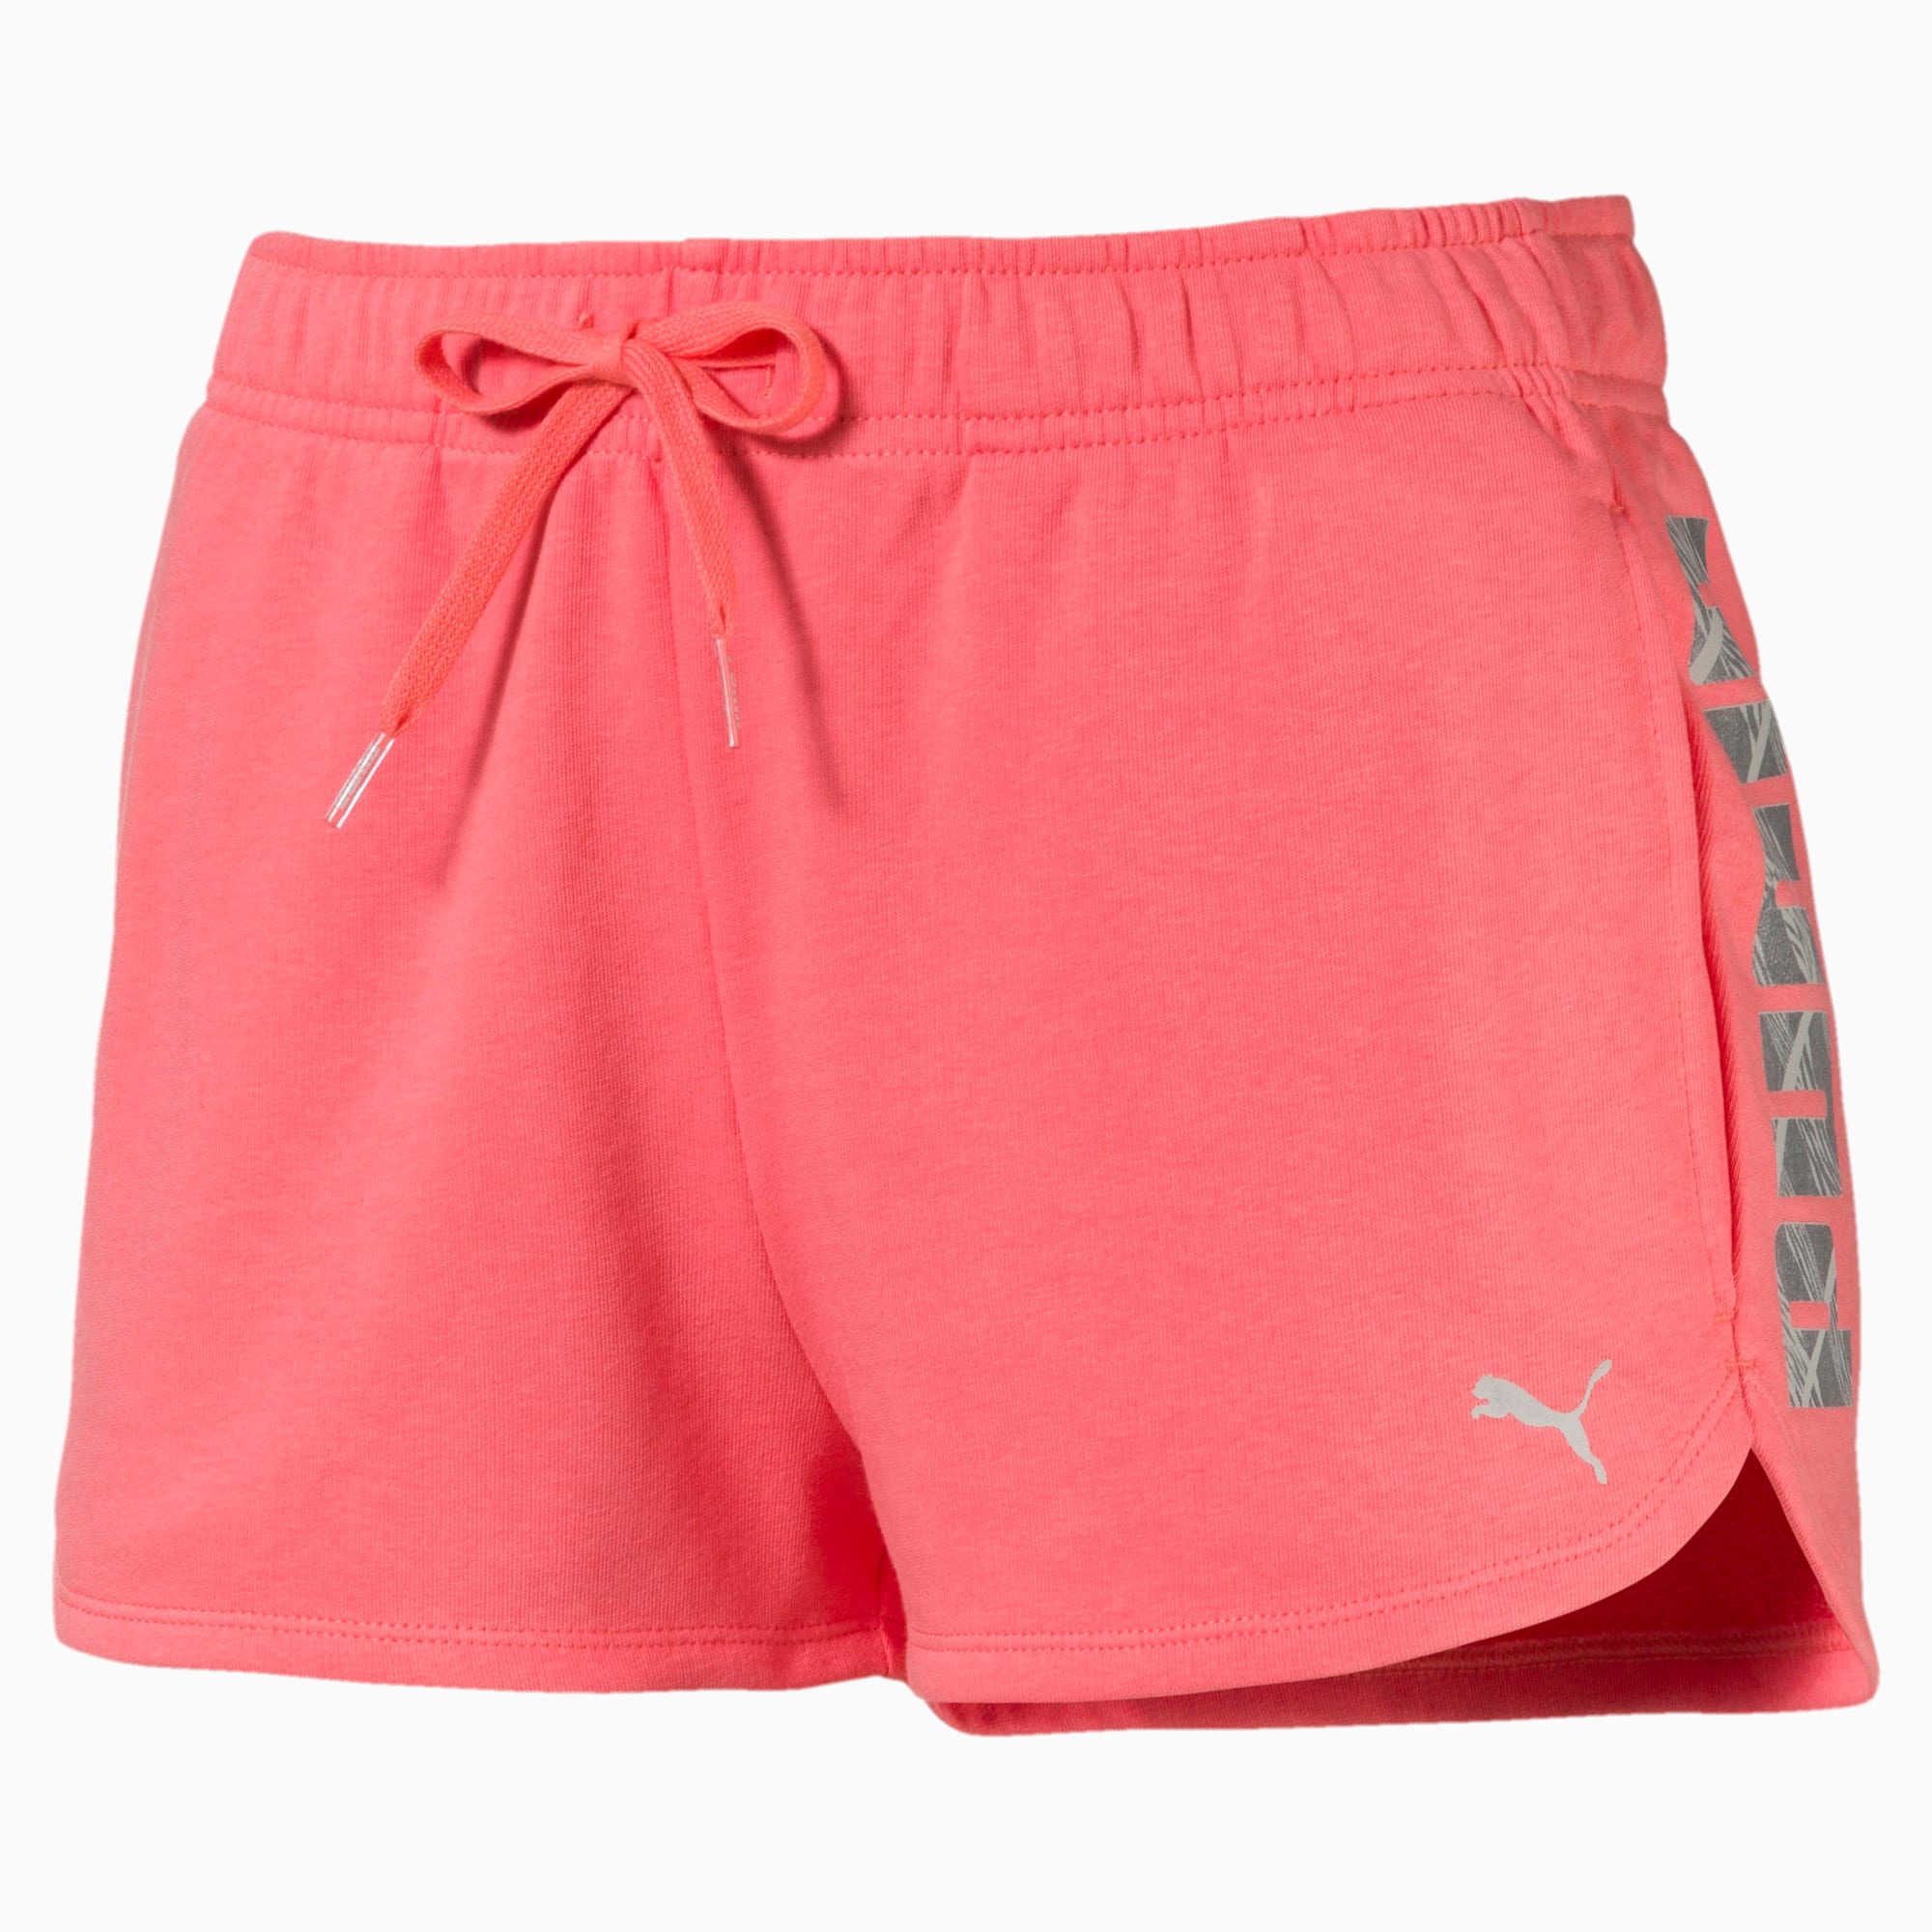 puma summer shorts